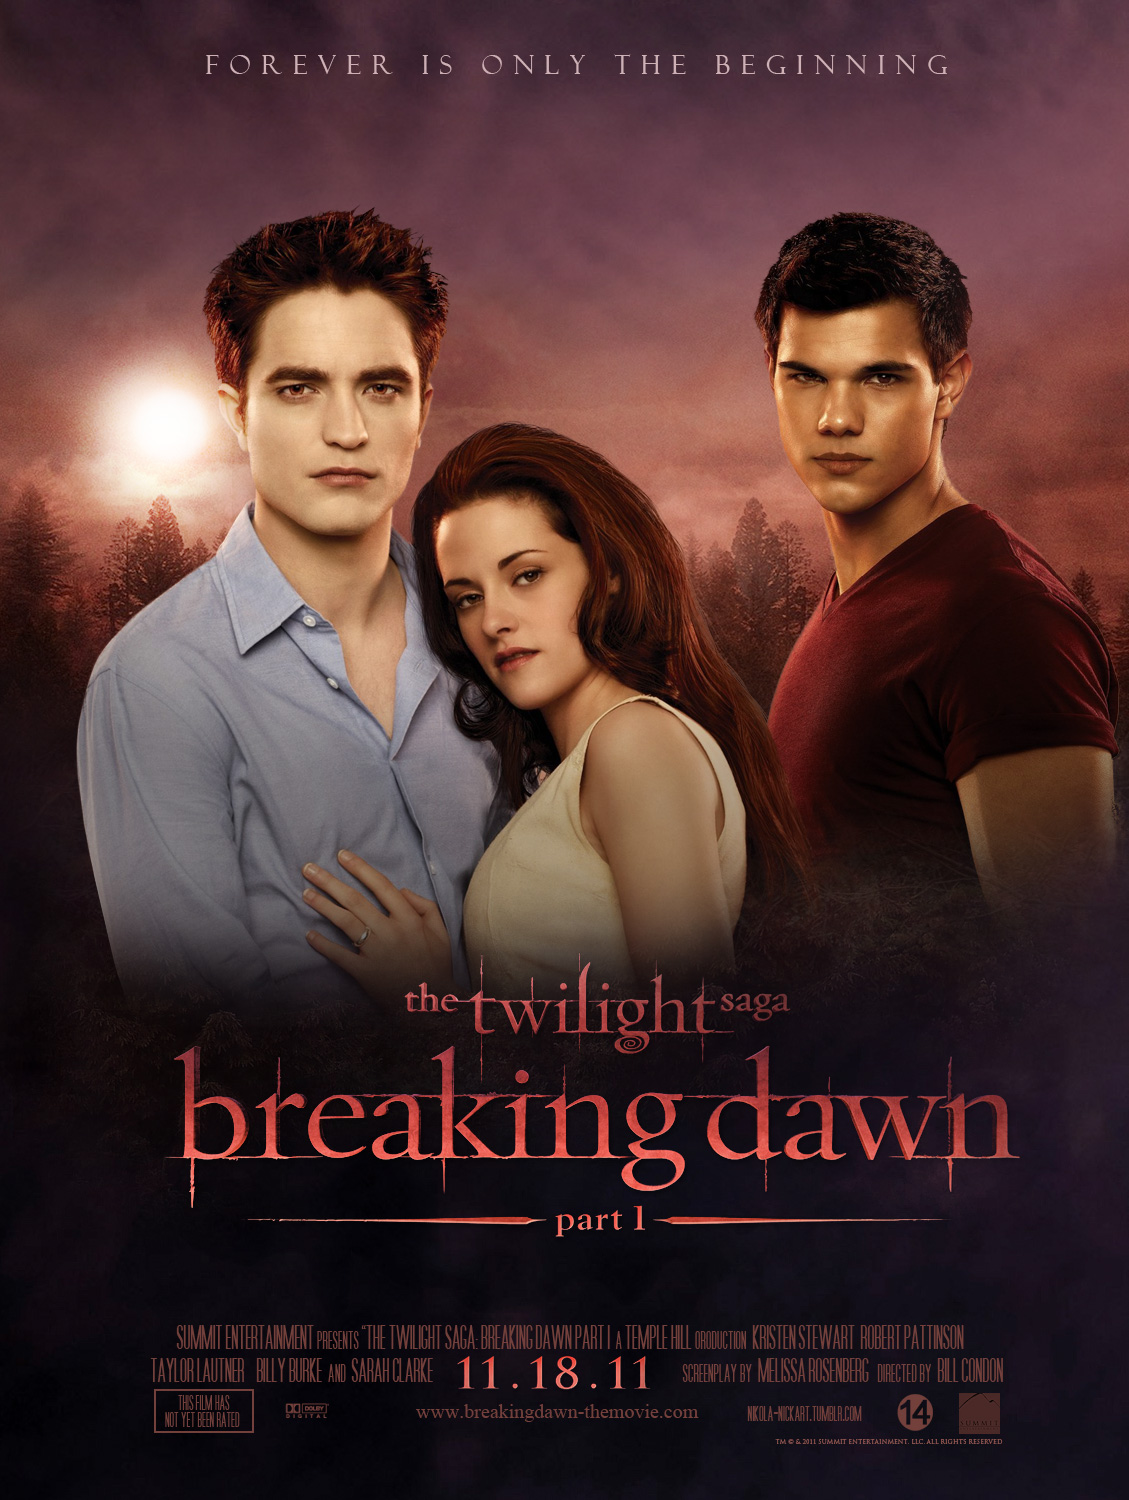 The Twilight Saga: Breaking Dawn - Part 1 #4